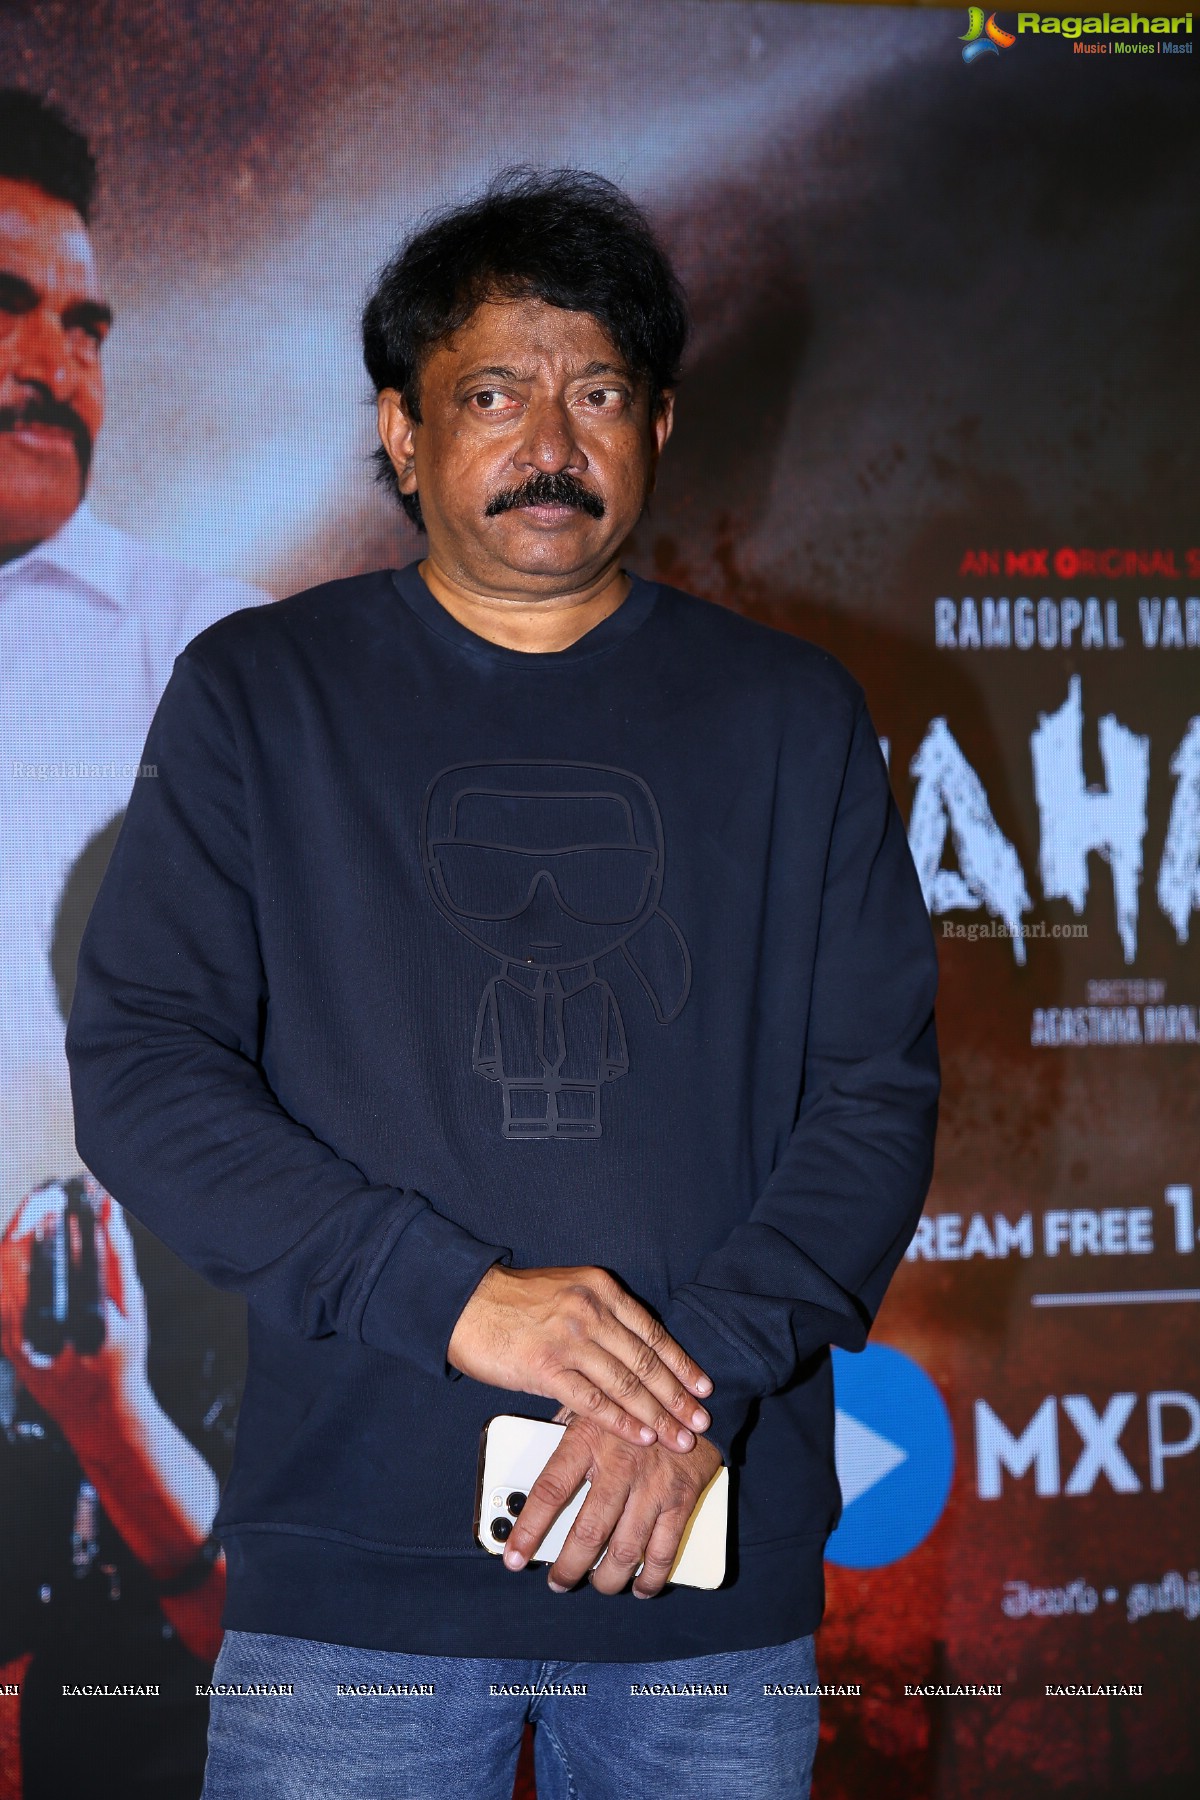 Ram Gopal Varma's Crime Thriller series 'Dhahanam' Press Meet